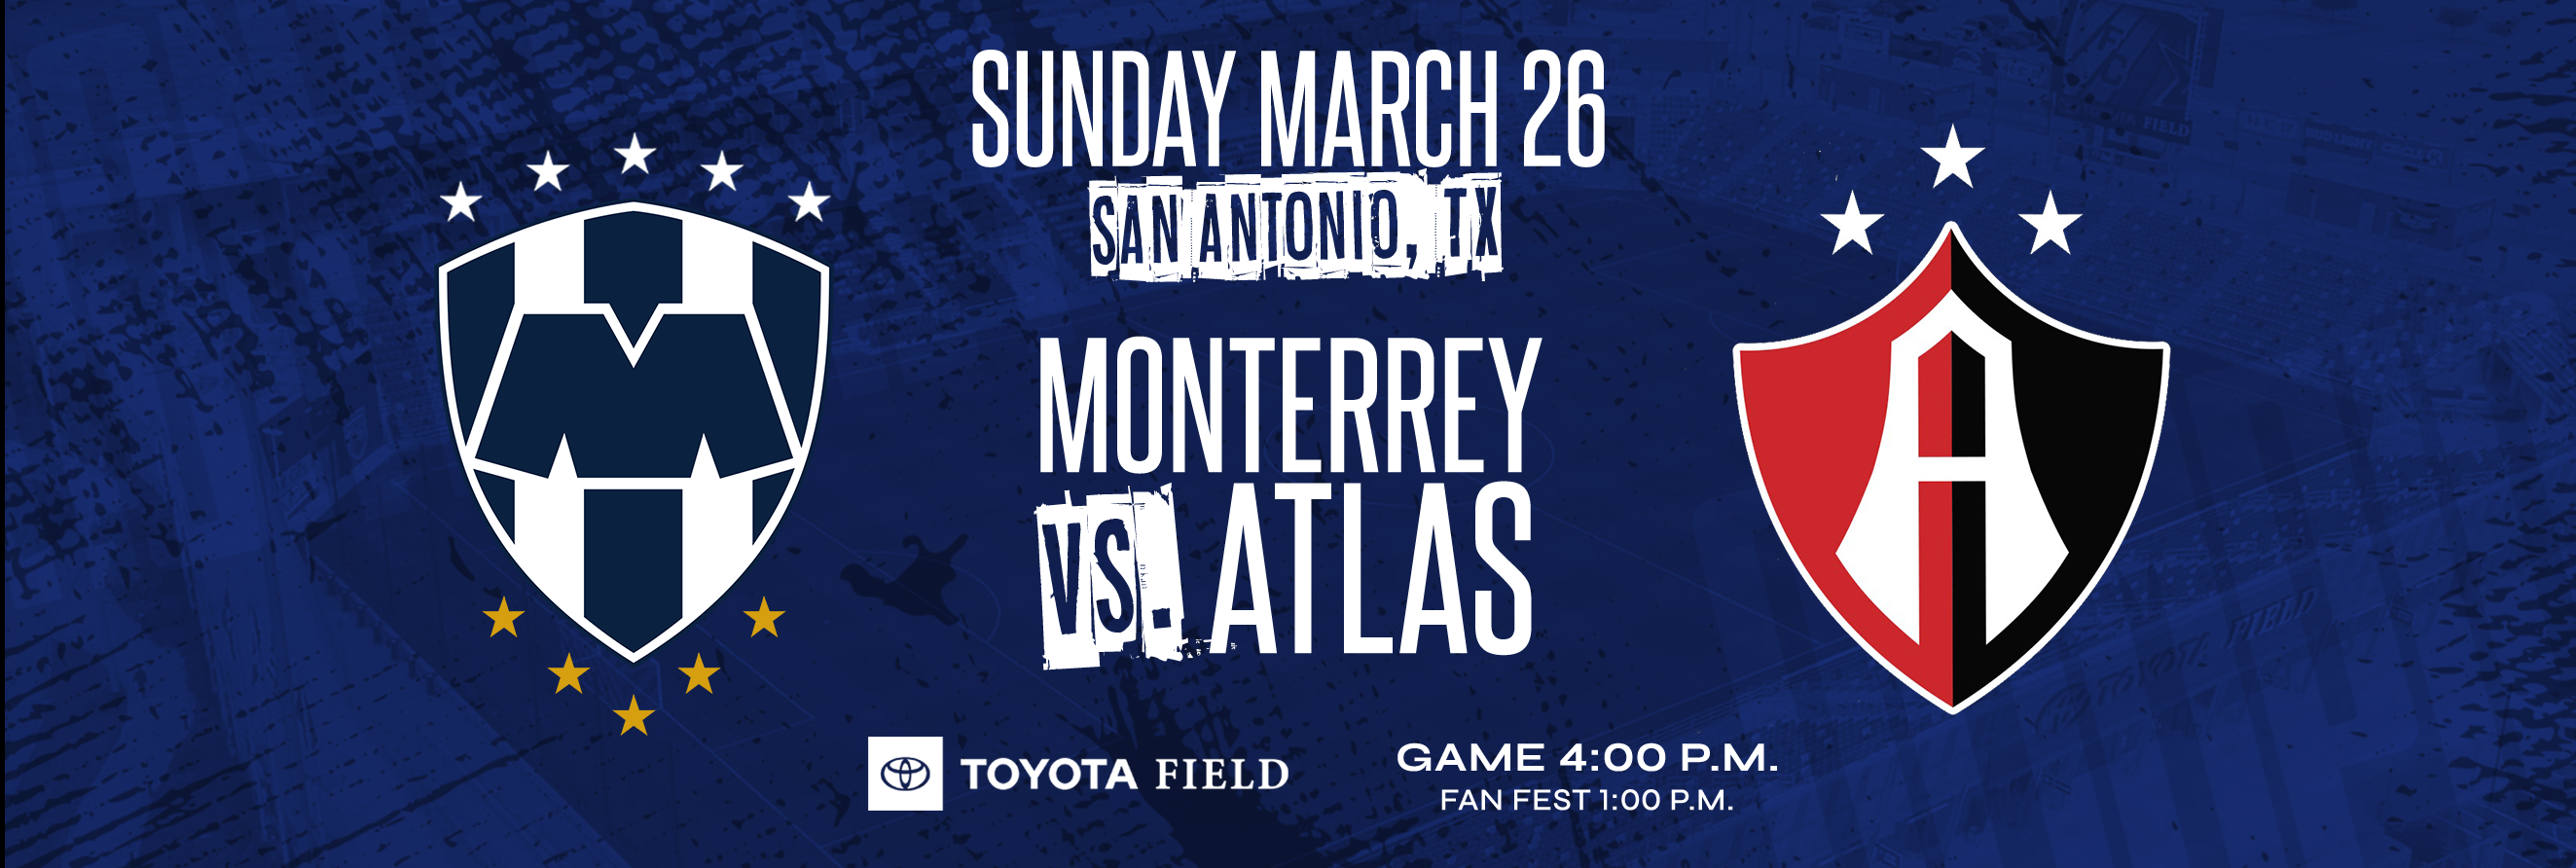 TOYOTA FIELD TO HOST LIGA MX FRIENDLY BETWEEN . MONTERREY AND ATLAS .  ON MARCH 26 - San Antonio FC